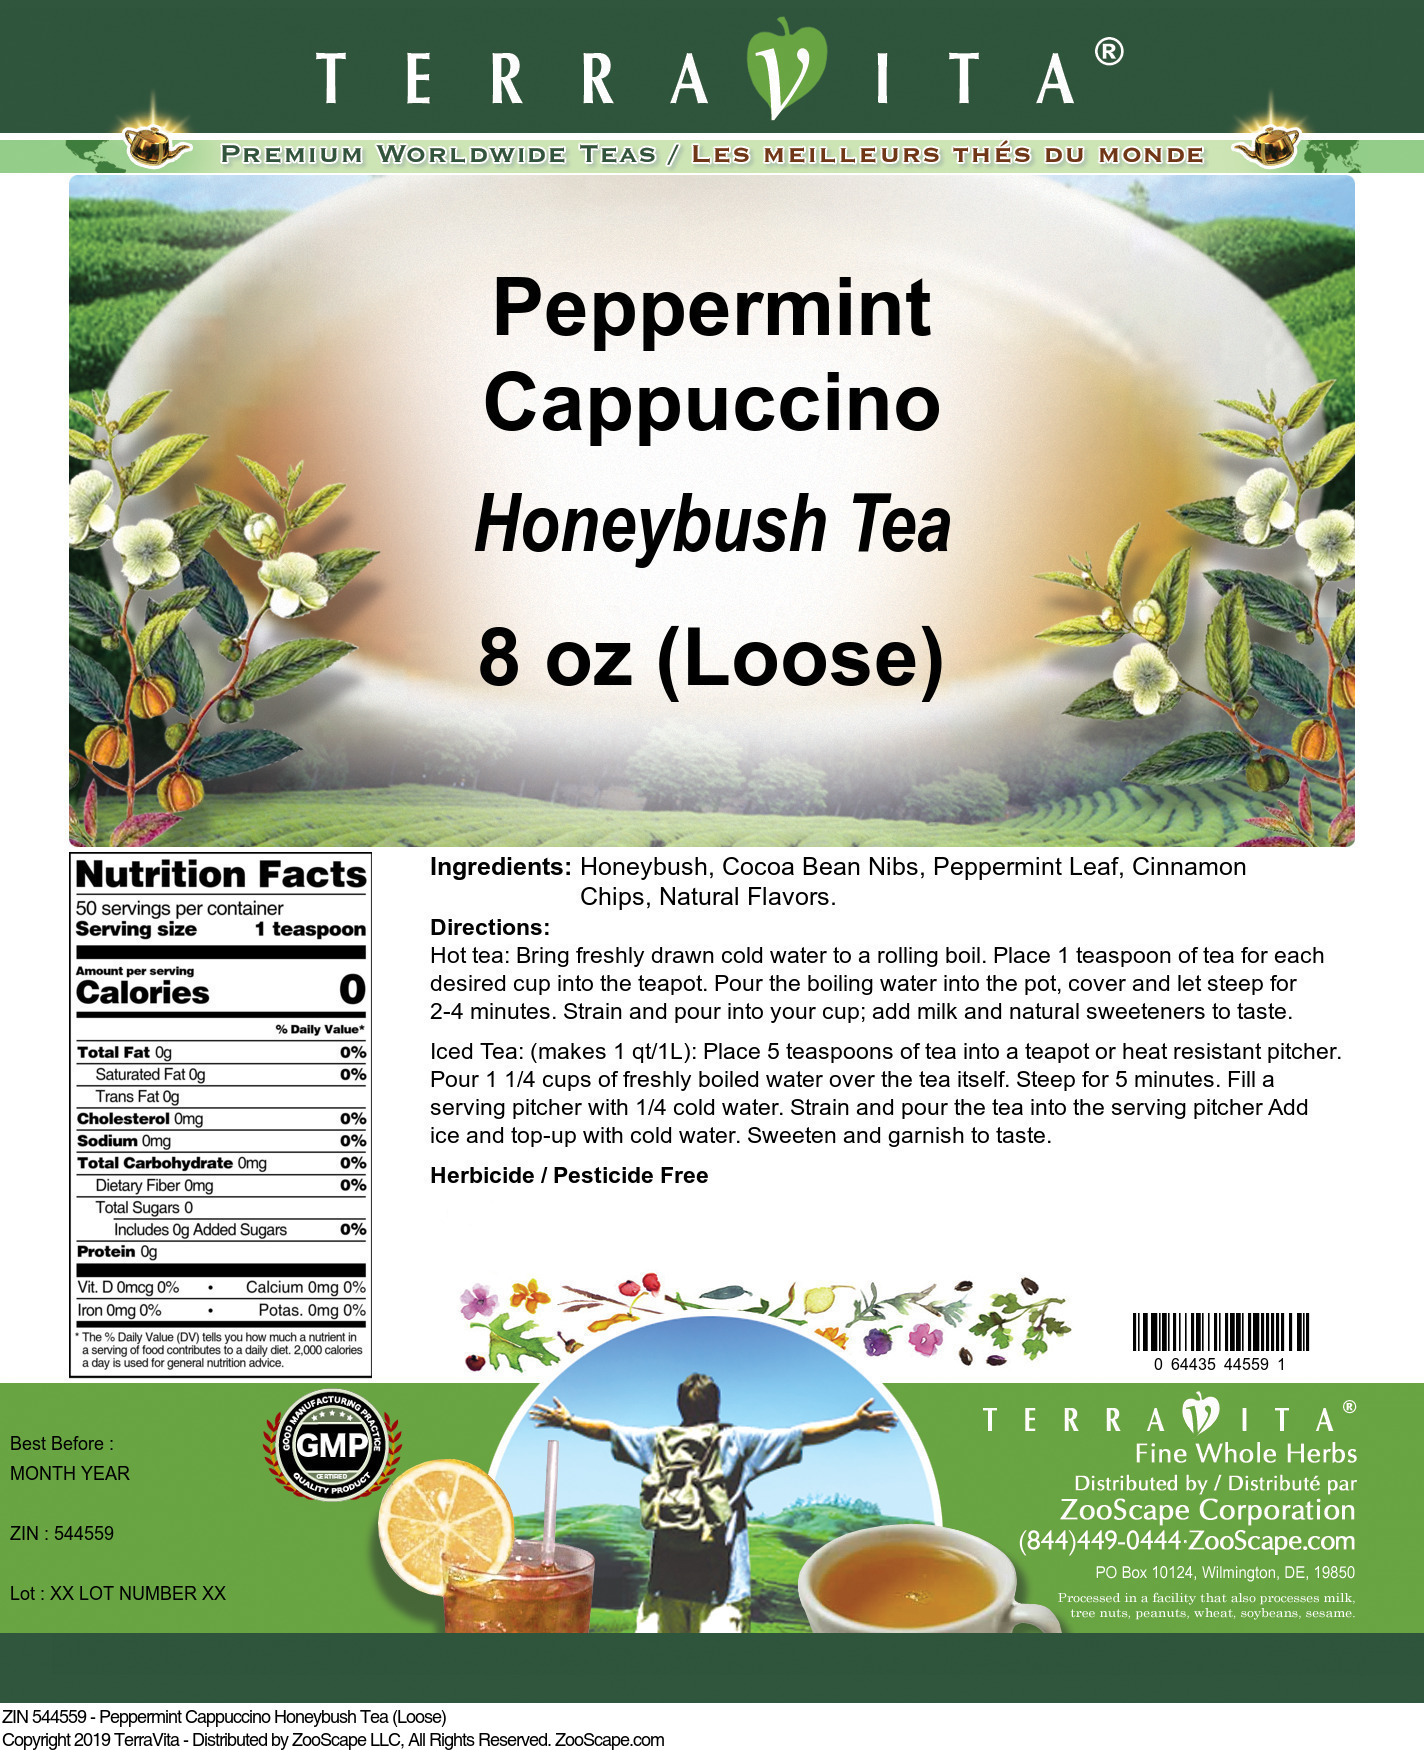 Peppermint Cappuccino Honeybush Tea (Loose) - Label